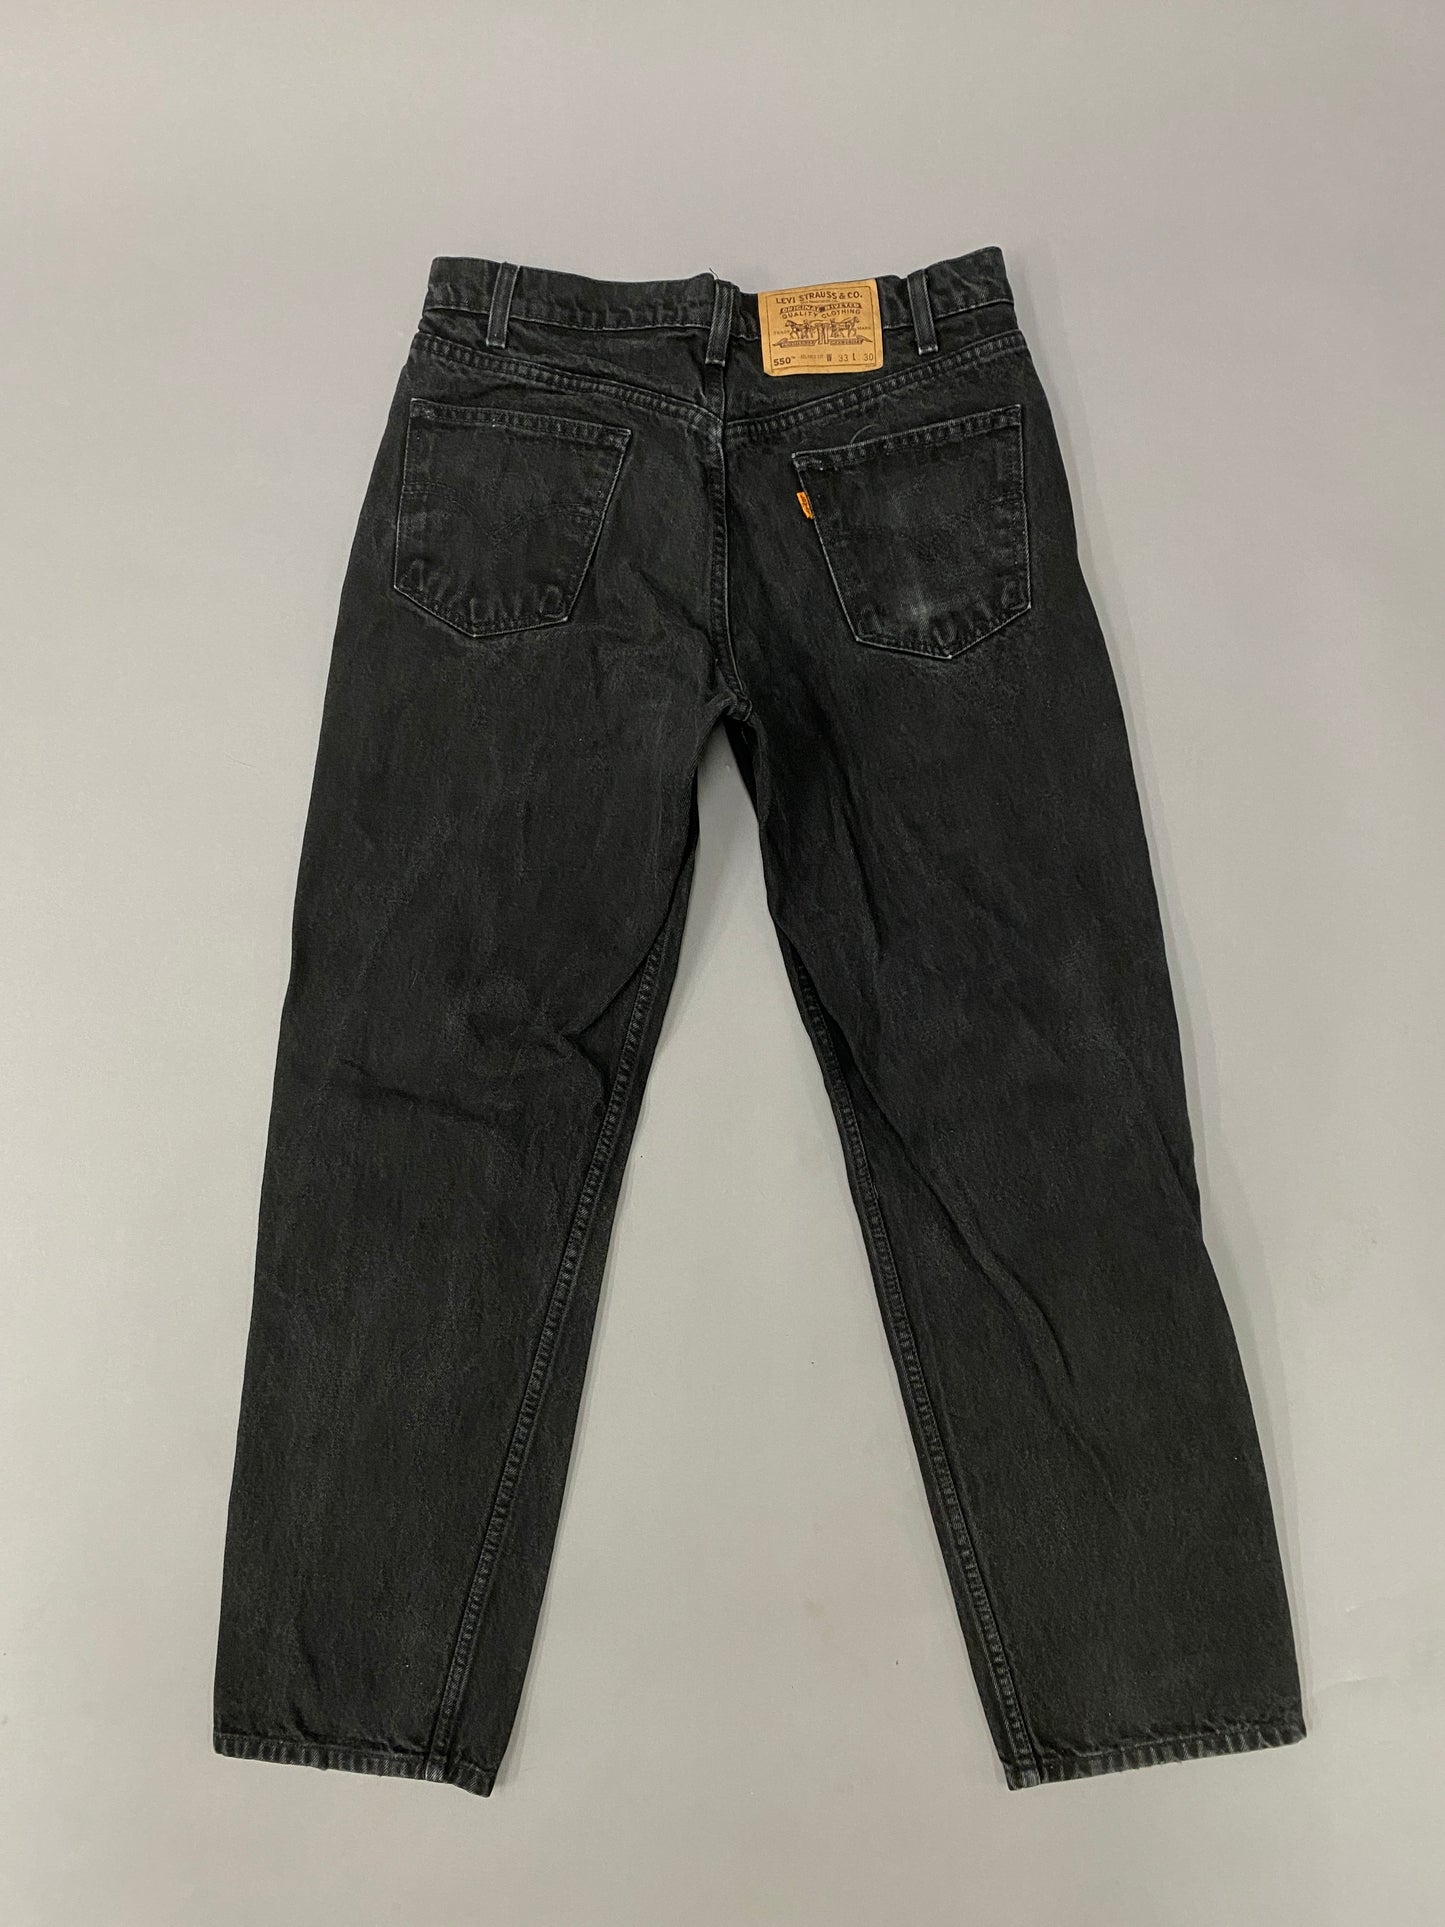 Levis Orange Tab Jeans - 33 x 30